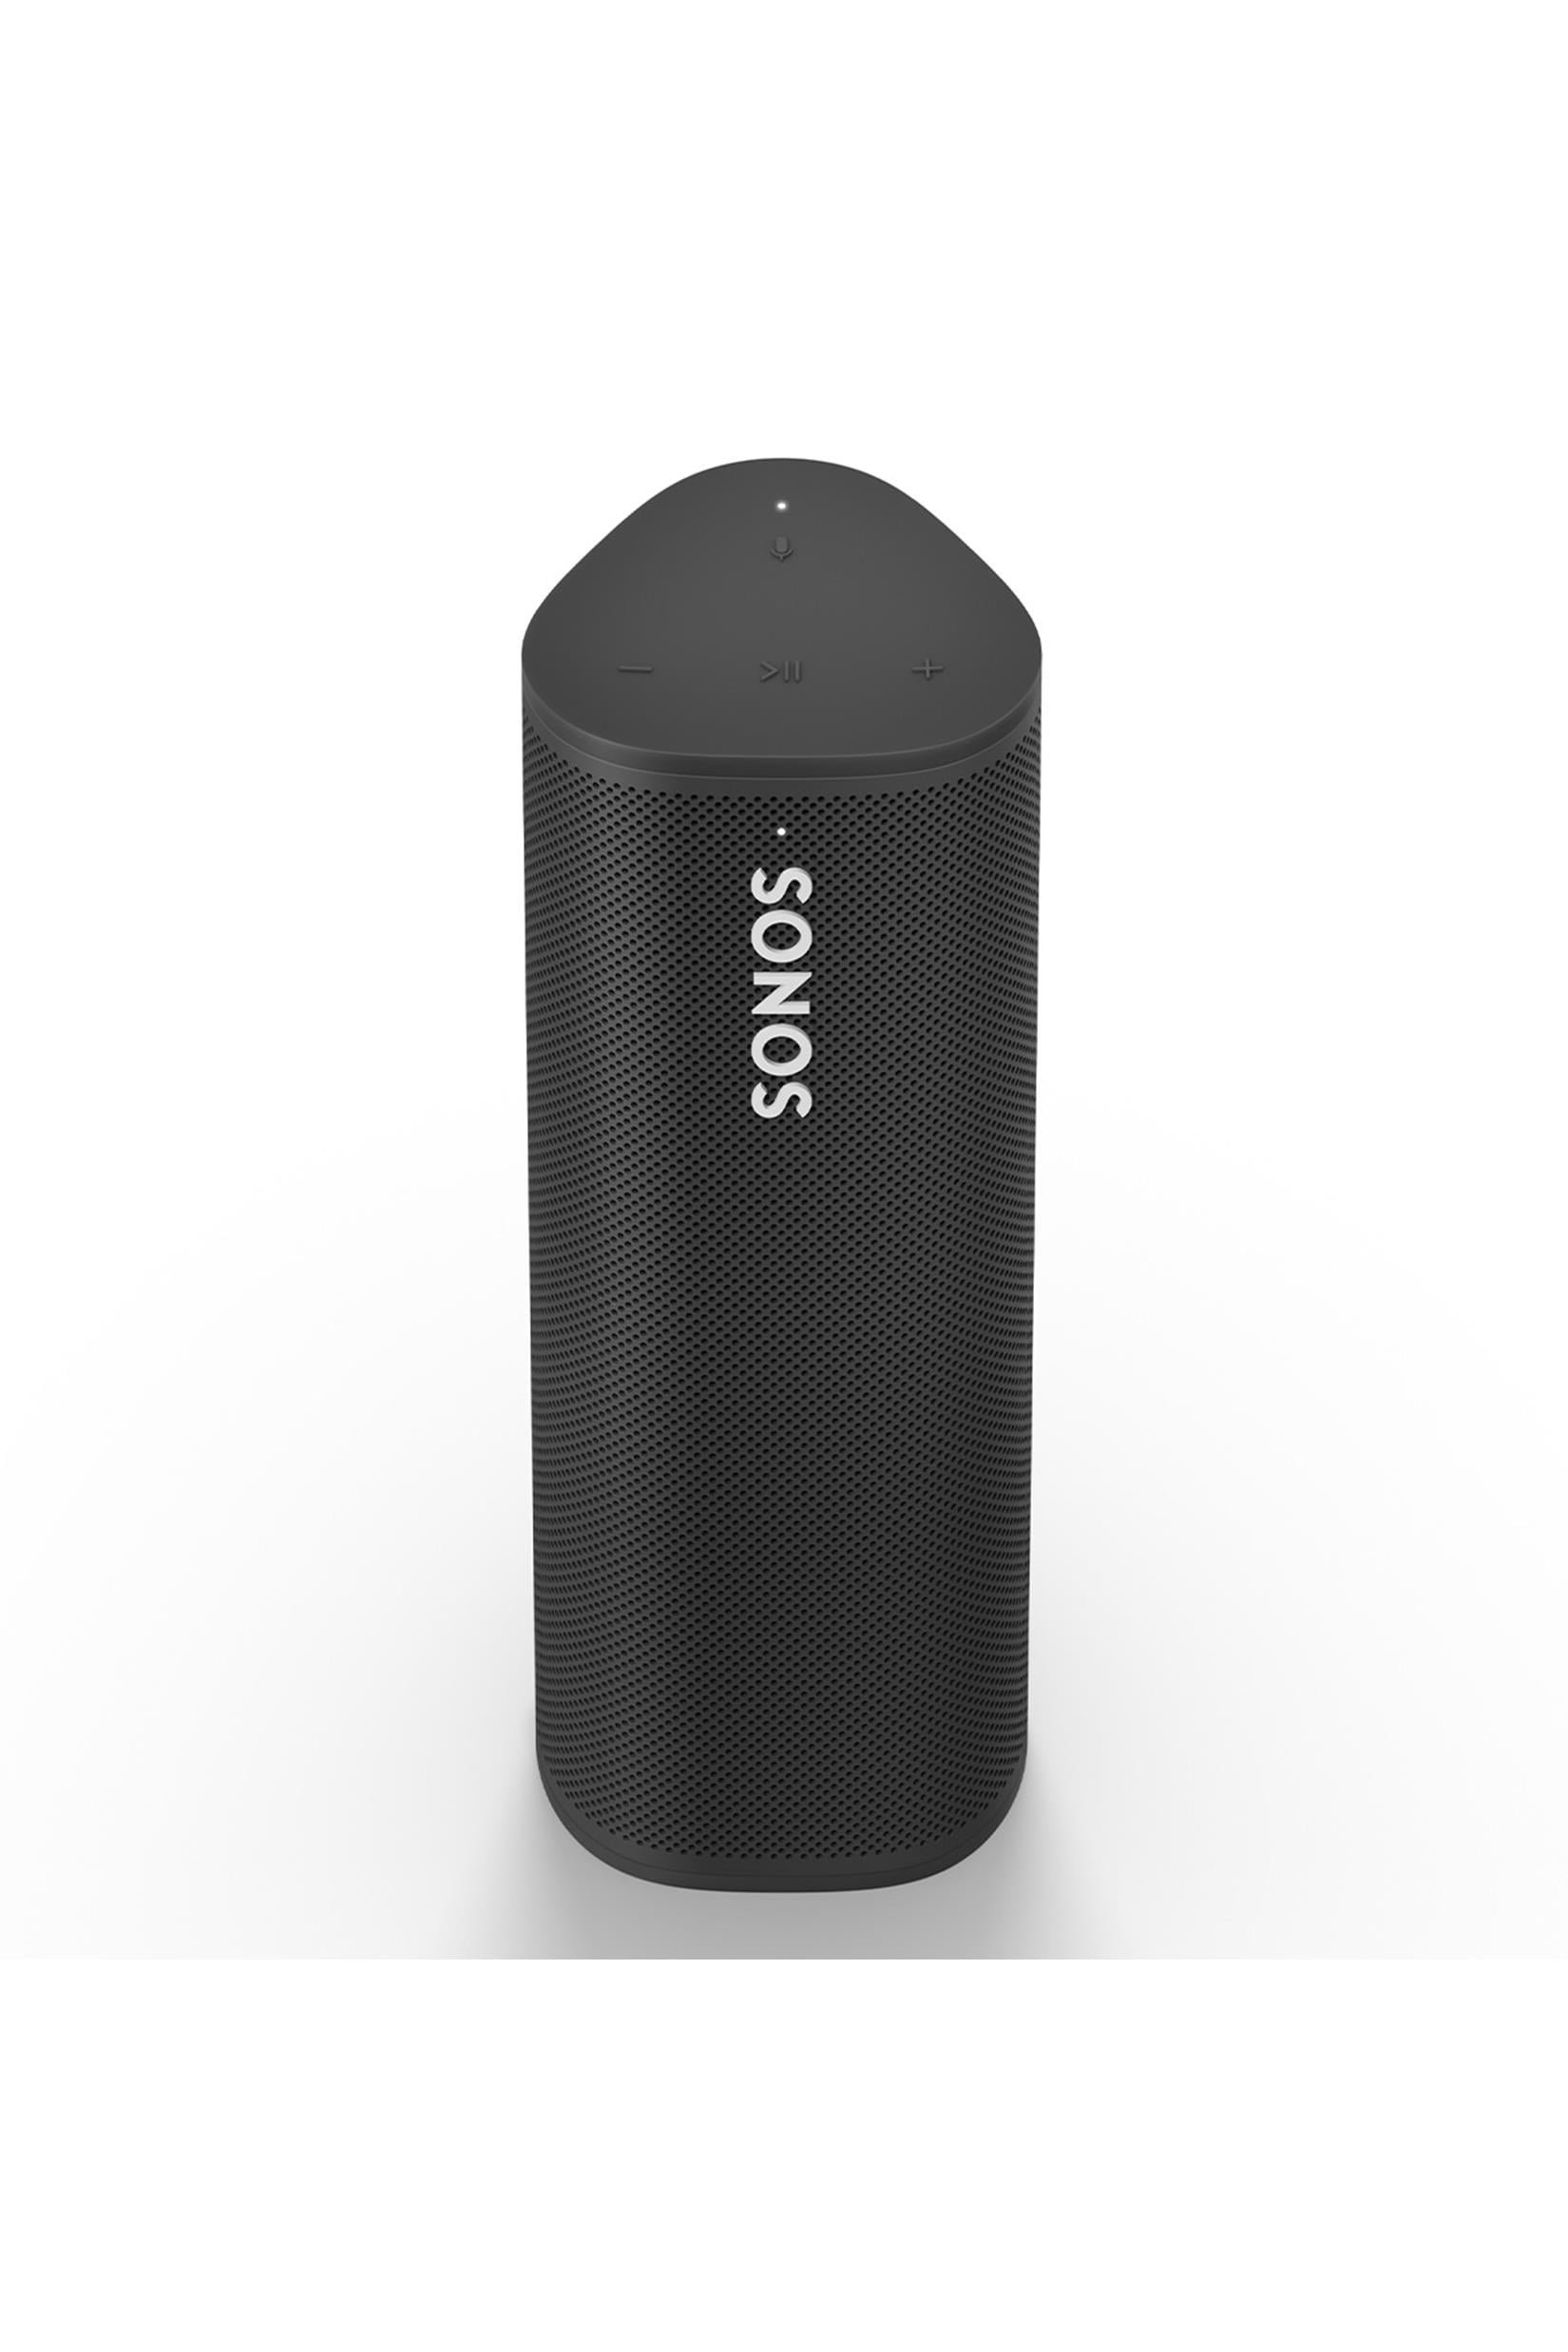 Se tilbage konsonant tapperhed Sonos Roam - Smart speaker - for portable use - Wi-Fi, App-controlled -  2-way - shadow black - Walmart.com